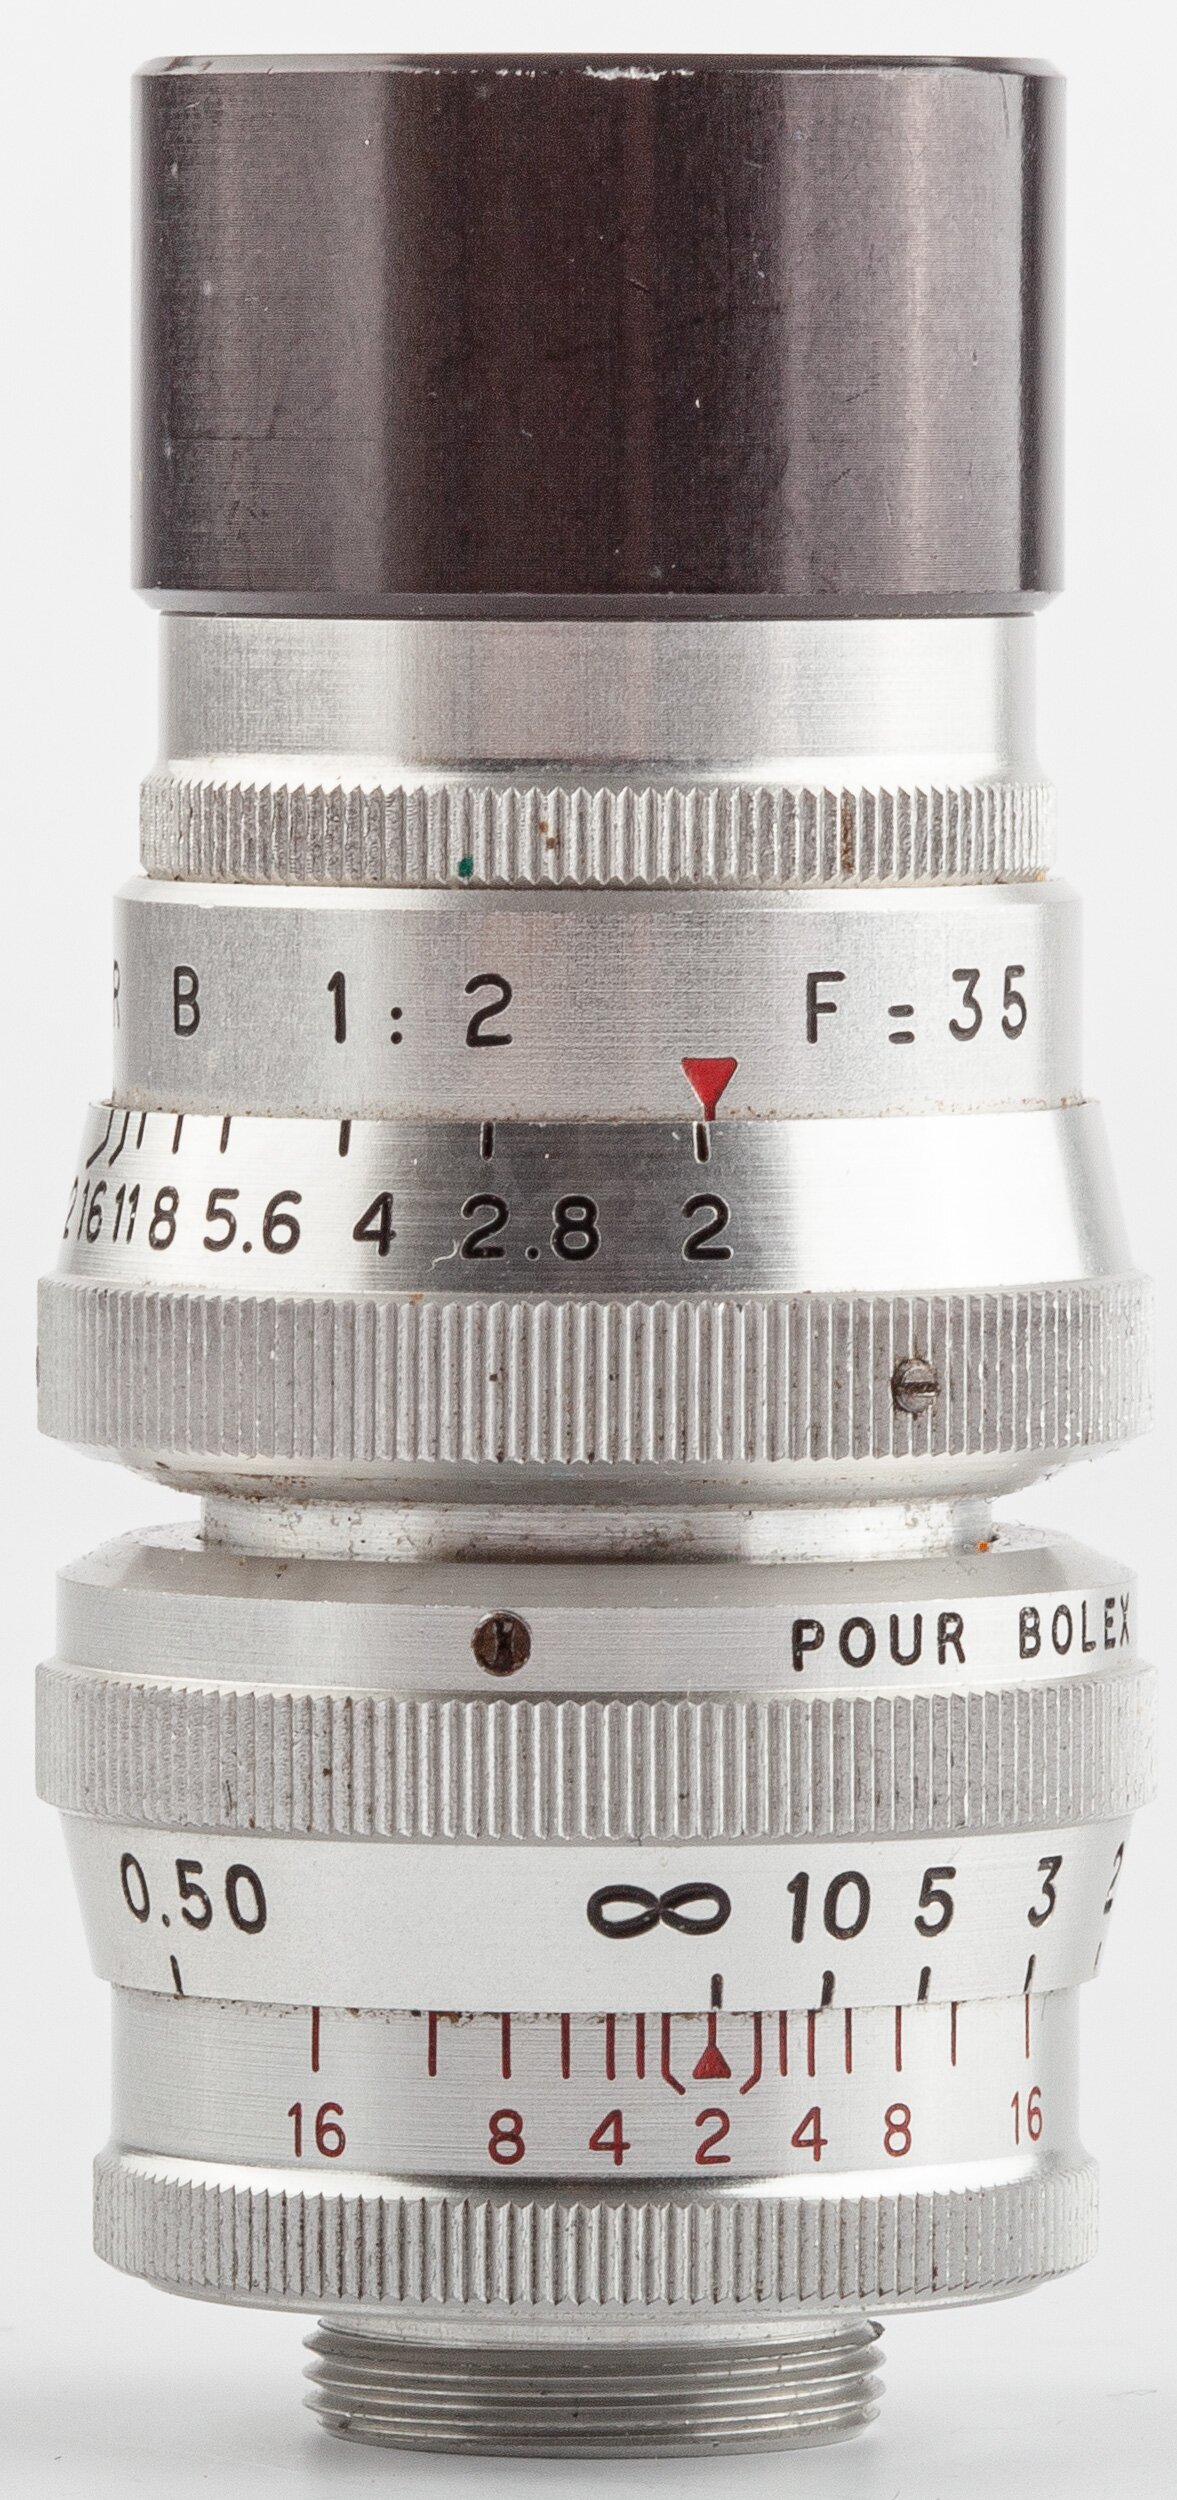 SOM Berthiot Cinor B 2/35mm d-mount